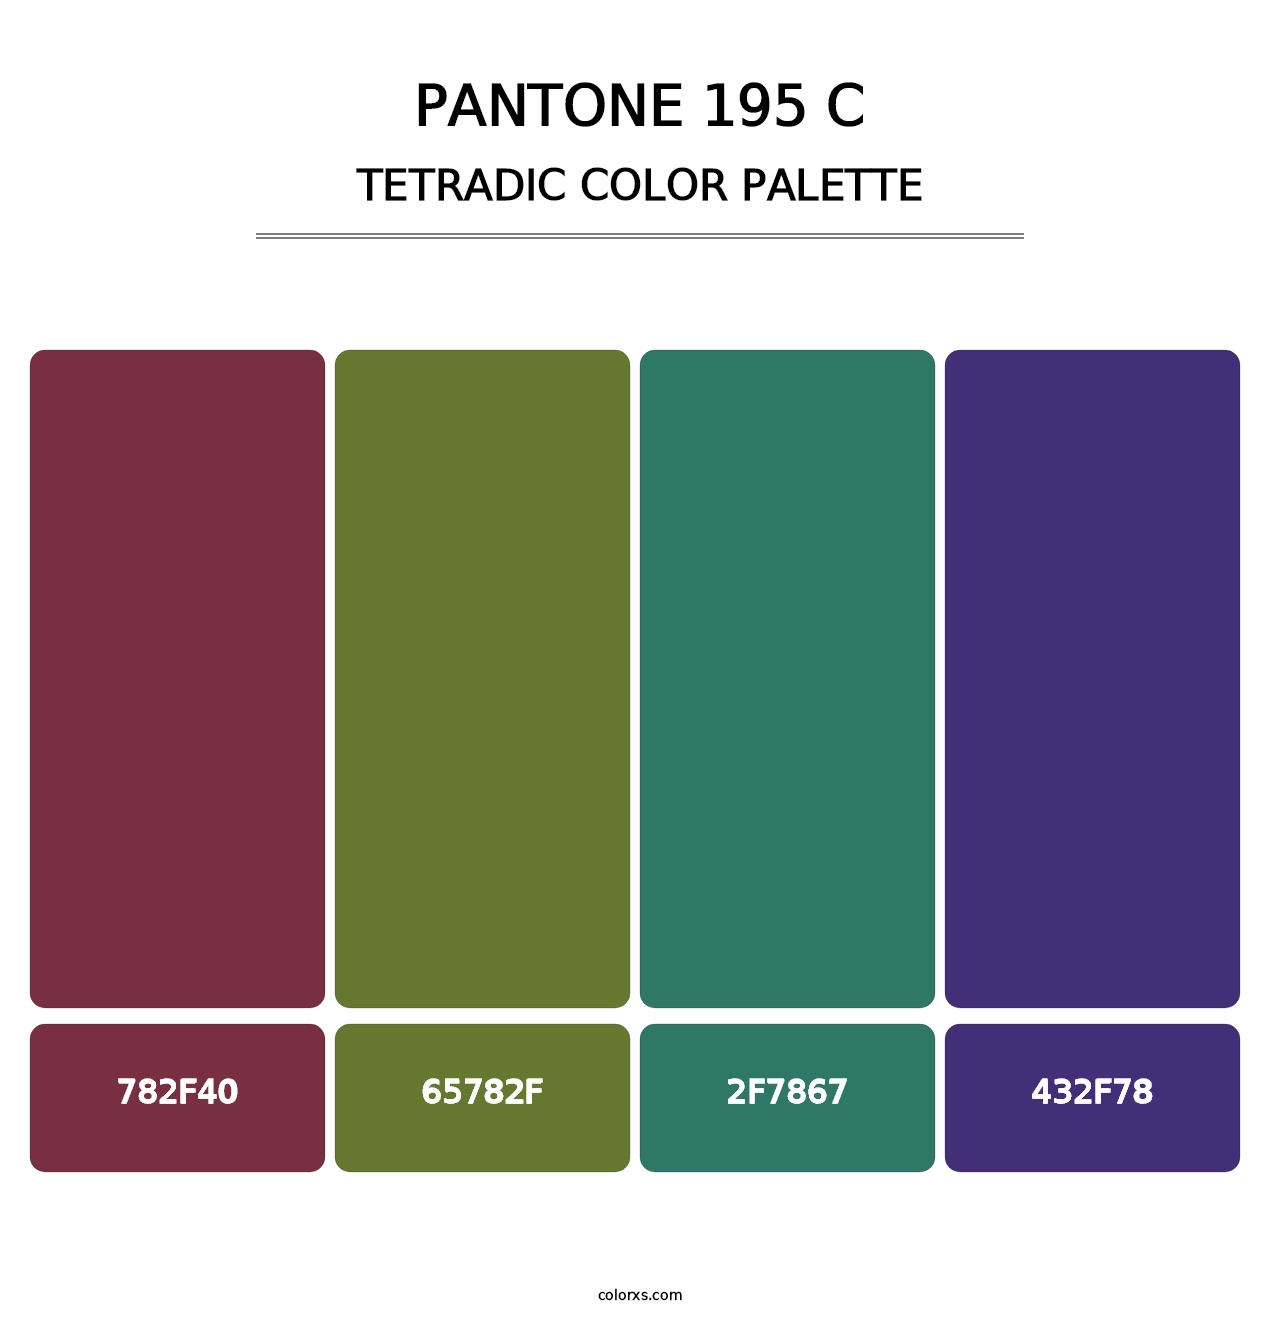 PANTONE 195 C - Tetradic Color Palette